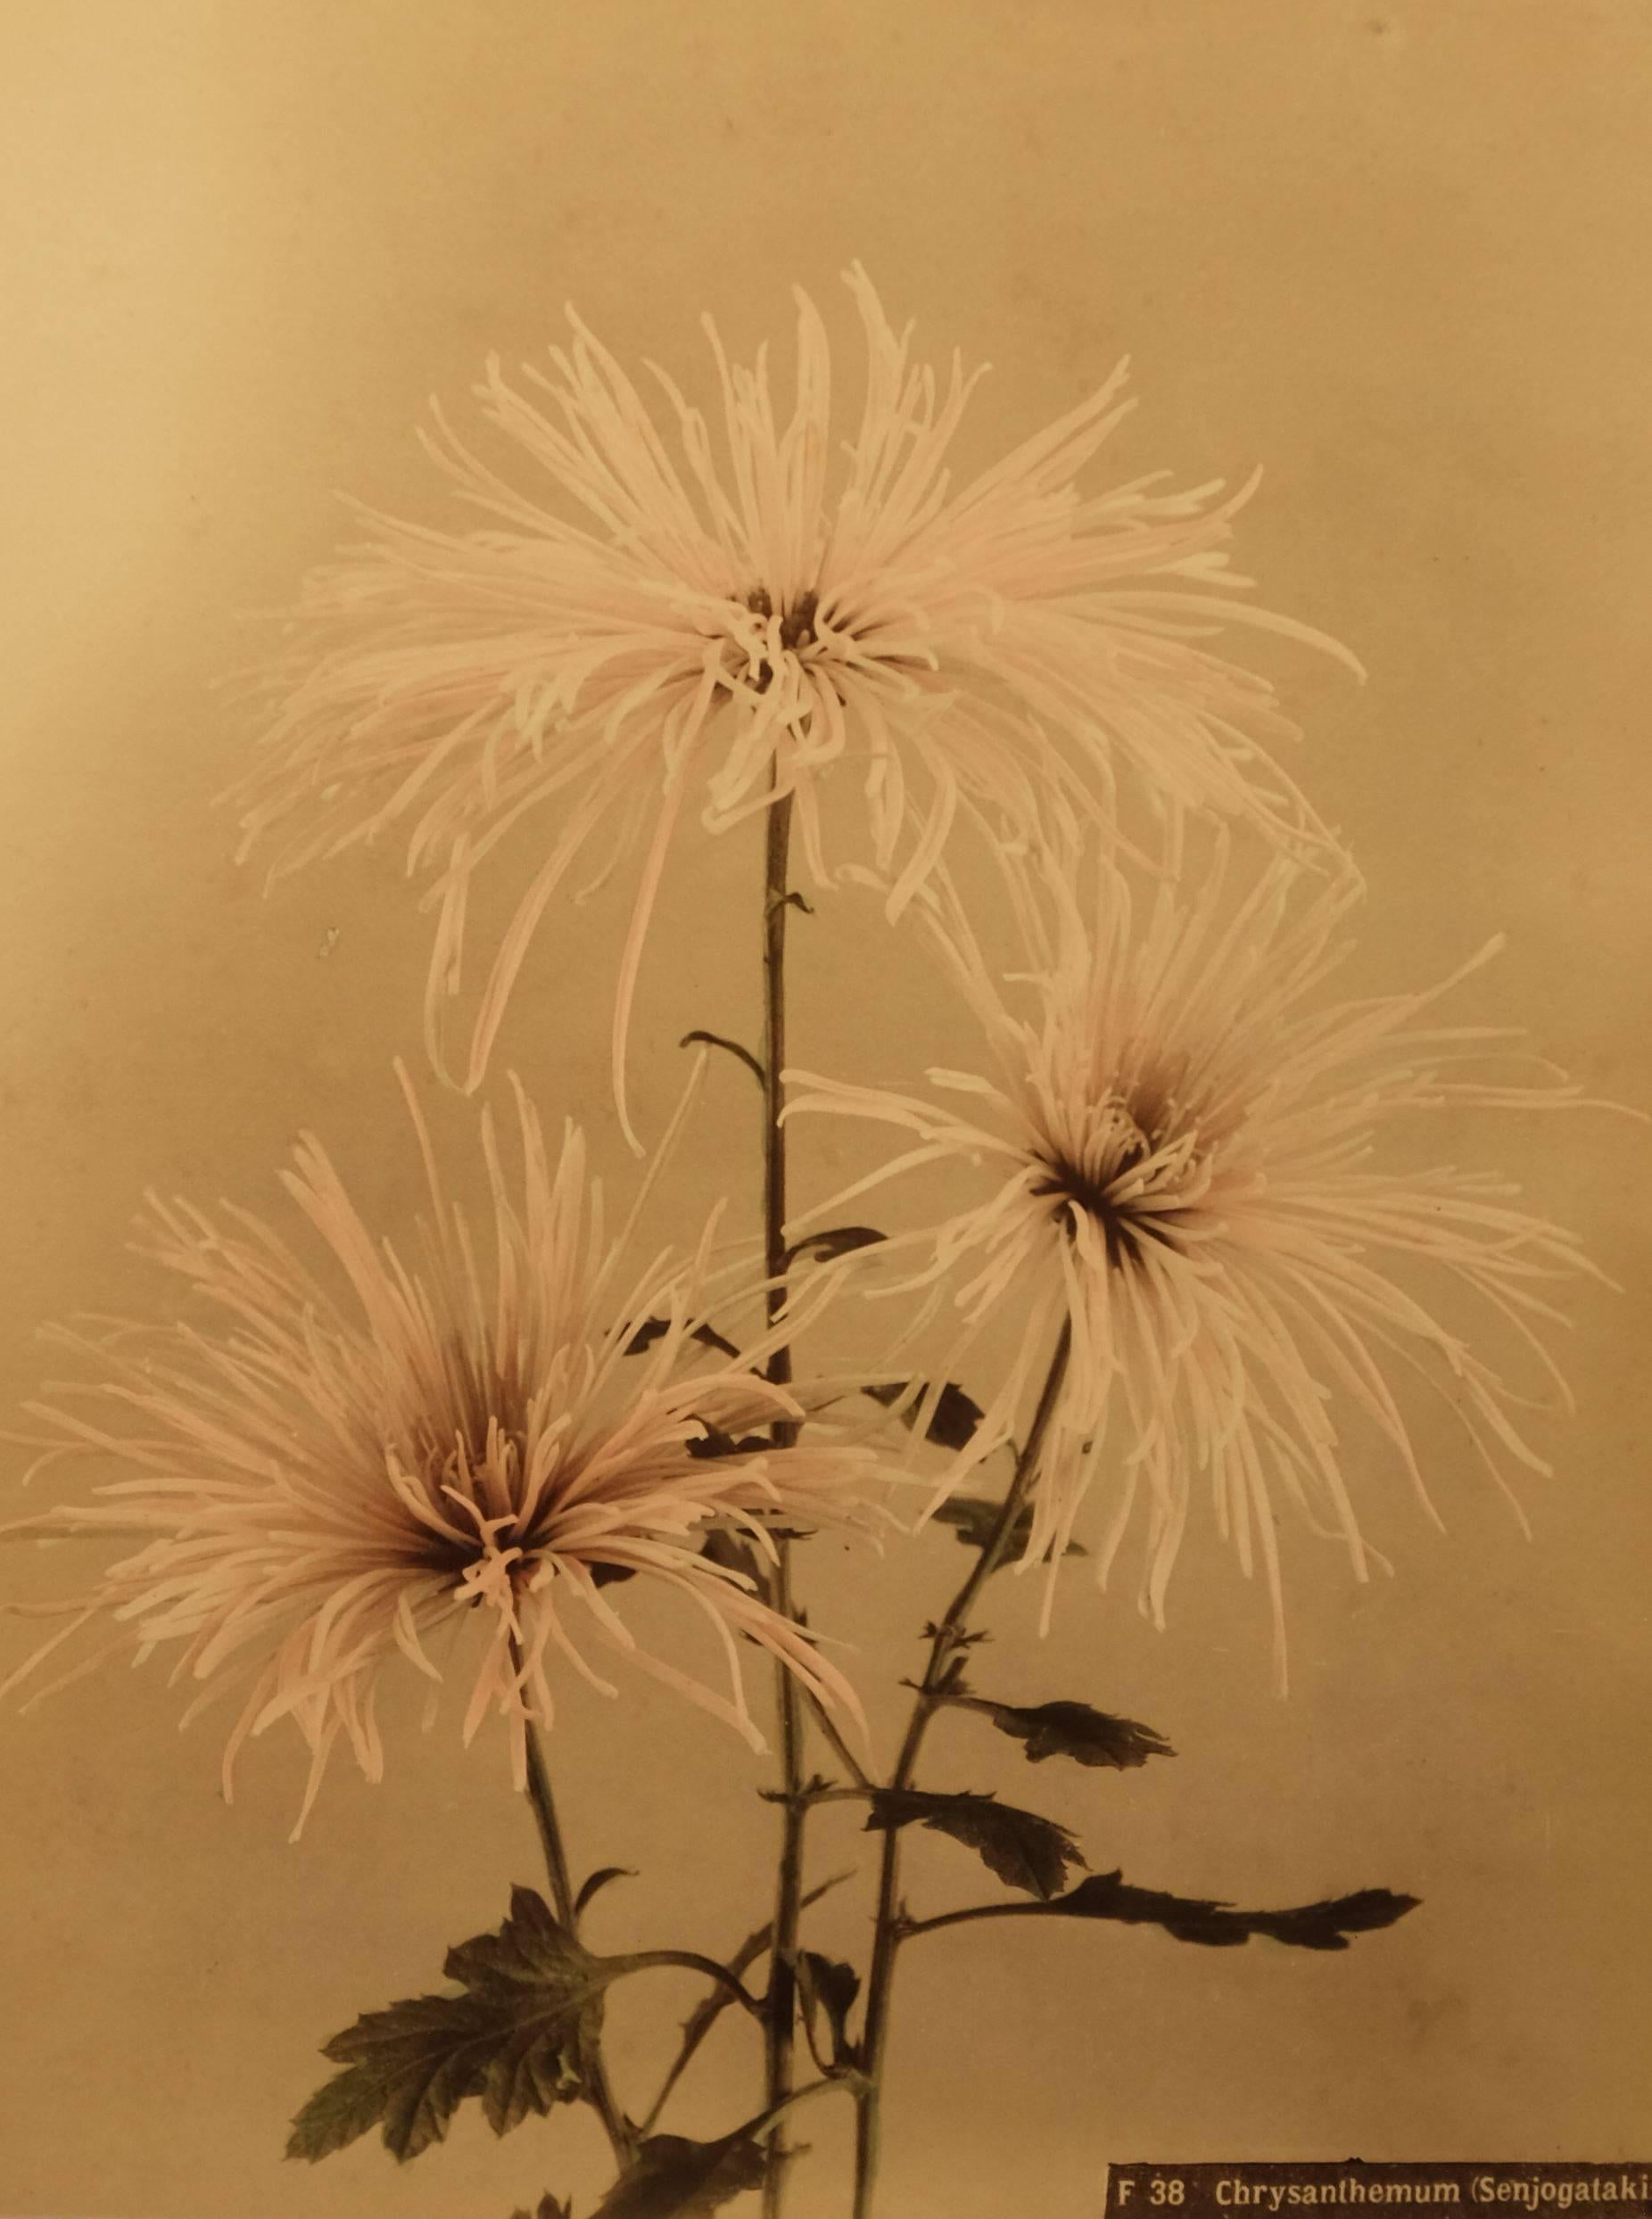 Unknown Still-Life Photograph - Chrysanthemum (Senjogataki)